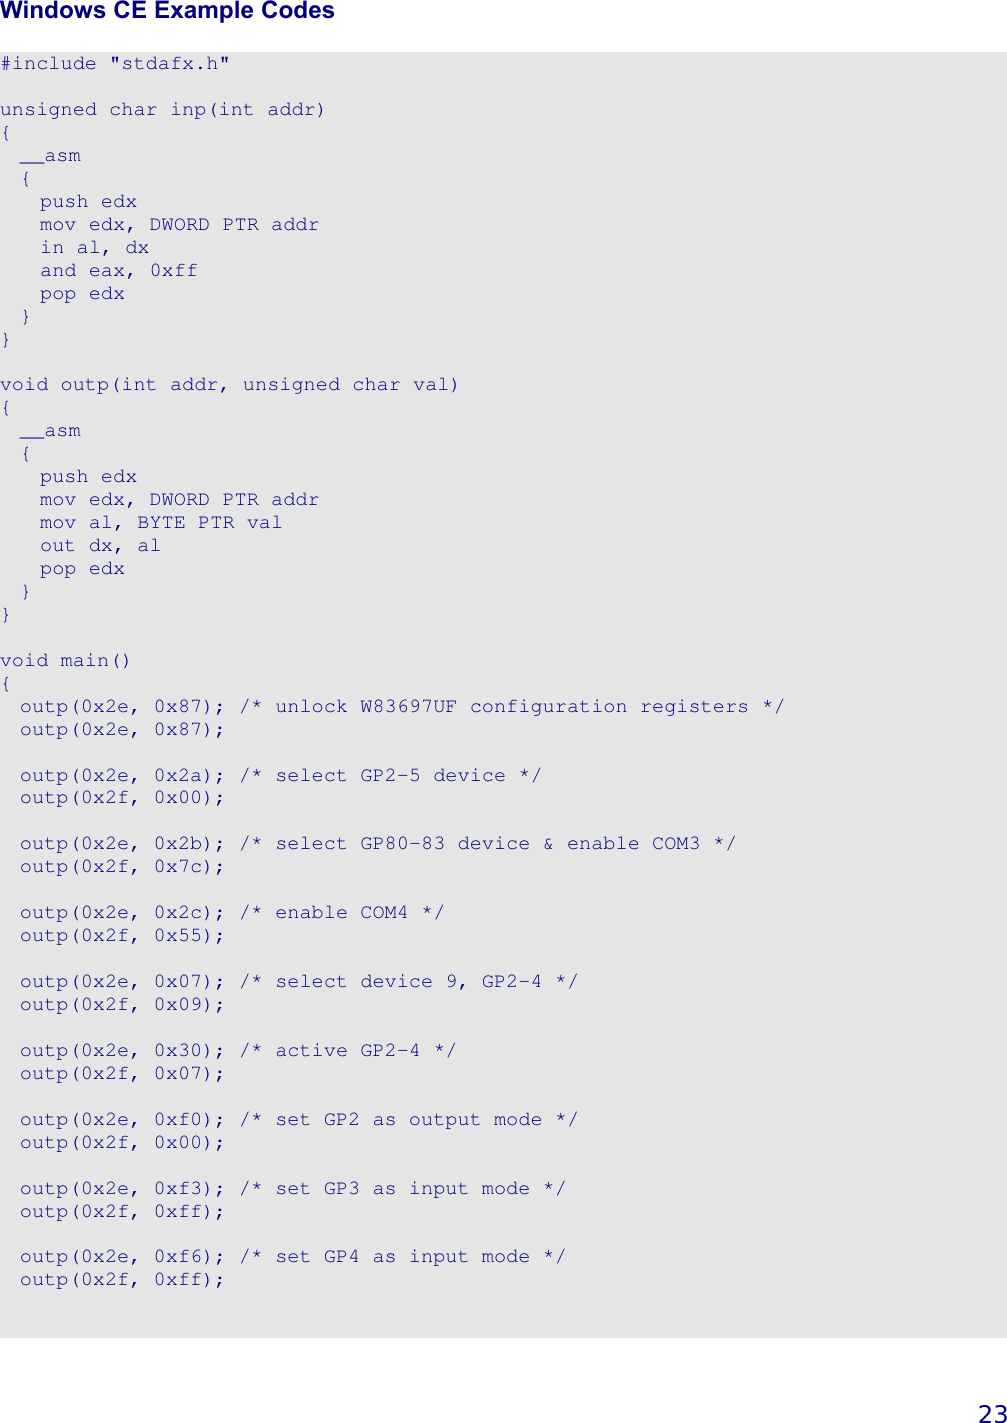   23 Windows CE Example Codes  #include &quot;stdafx.h&quot;  unsigned char inp(int addr) {   __asm   {     push edx     mov edx, DWORD PTR addr     in al, dx     and eax, 0xff     pop edx   } }  void outp(int addr, unsigned char val) {   __asm   {     push edx     mov edx, DWORD PTR addr     mov al, BYTE PTR val     out dx, al     pop edx   } }  void main() {   outp(0x2e, 0x87); /* unlock W83697UF configuration registers */   outp(0x2e, 0x87);    outp(0x2e, 0x2a); /* select GP2-5 device */   outp(0x2f, 0x00);    outp(0x2e, 0x2b); /* select GP80-83 device &amp; enable COM3 */   outp(0x2f, 0x7c);    outp(0x2e, 0x2c); /* enable COM4 */   outp(0x2f, 0x55);    outp(0x2e, 0x07); /* select device 9, GP2-4 */   outp(0x2f, 0x09);    outp(0x2e, 0x30); /* active GP2-4 */   outp(0x2f, 0x07);    outp(0x2e, 0xf0); /* set GP2 as output mode */   outp(0x2f, 0x00);    outp(0x2e, 0xf3); /* set GP3 as input mode */   outp(0x2f, 0xff);    outp(0x2e, 0xf6); /* set GP4 as input mode */   outp(0x2f, 0xff);    